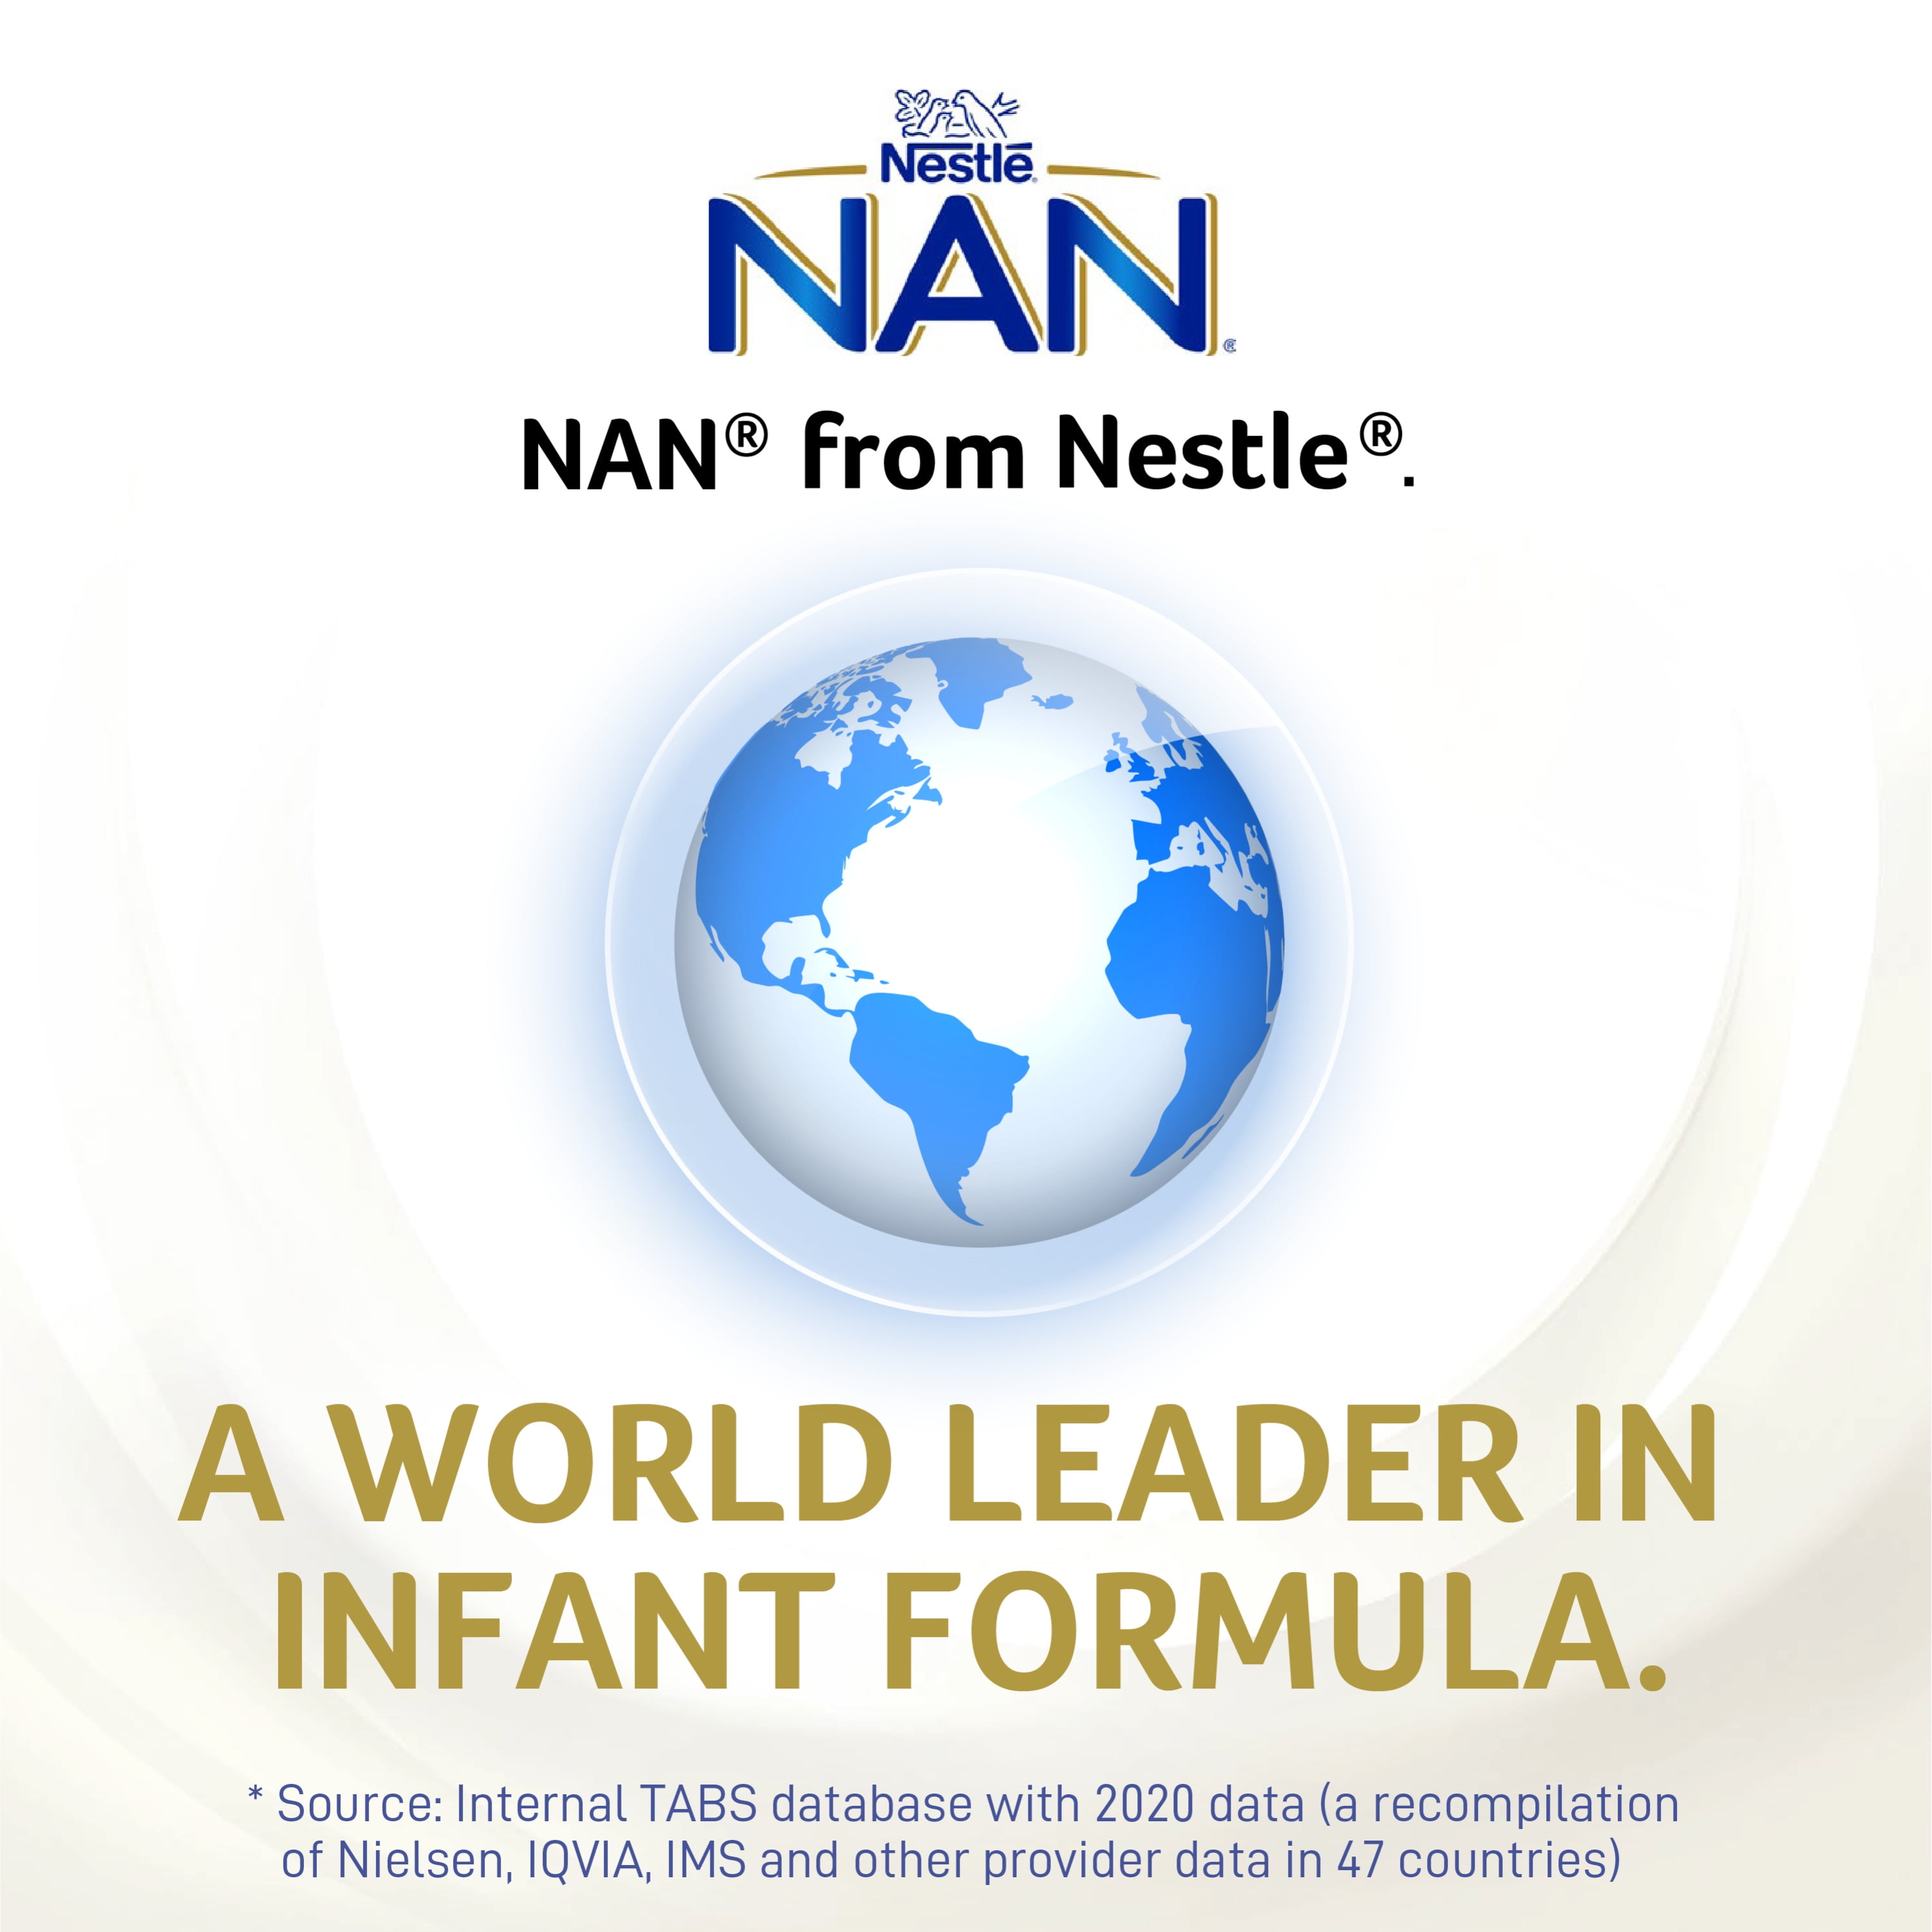 1 Can Nestle NAN Supreme Pro 1 Baby/Infant Formula 800g, Exp 5/18/2024 (NEW)